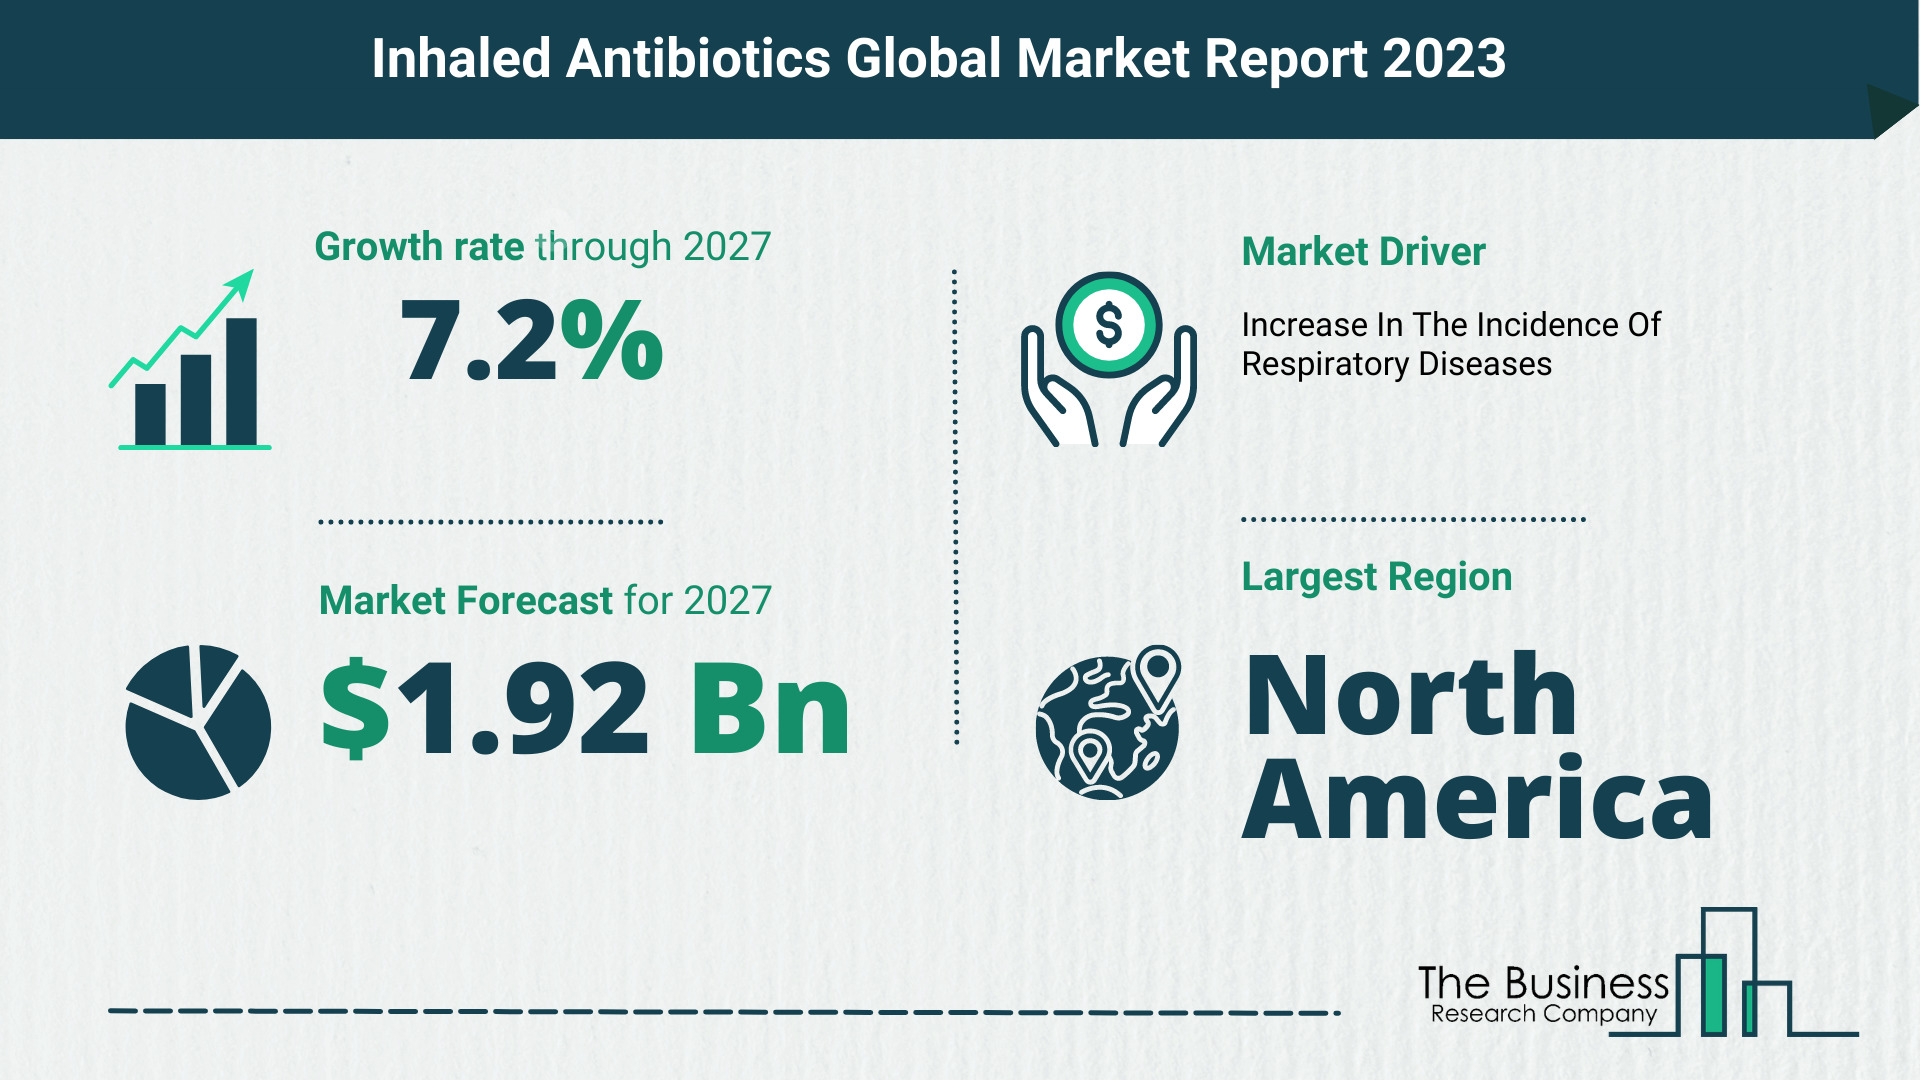 Global Inhaled Antibiotics Market